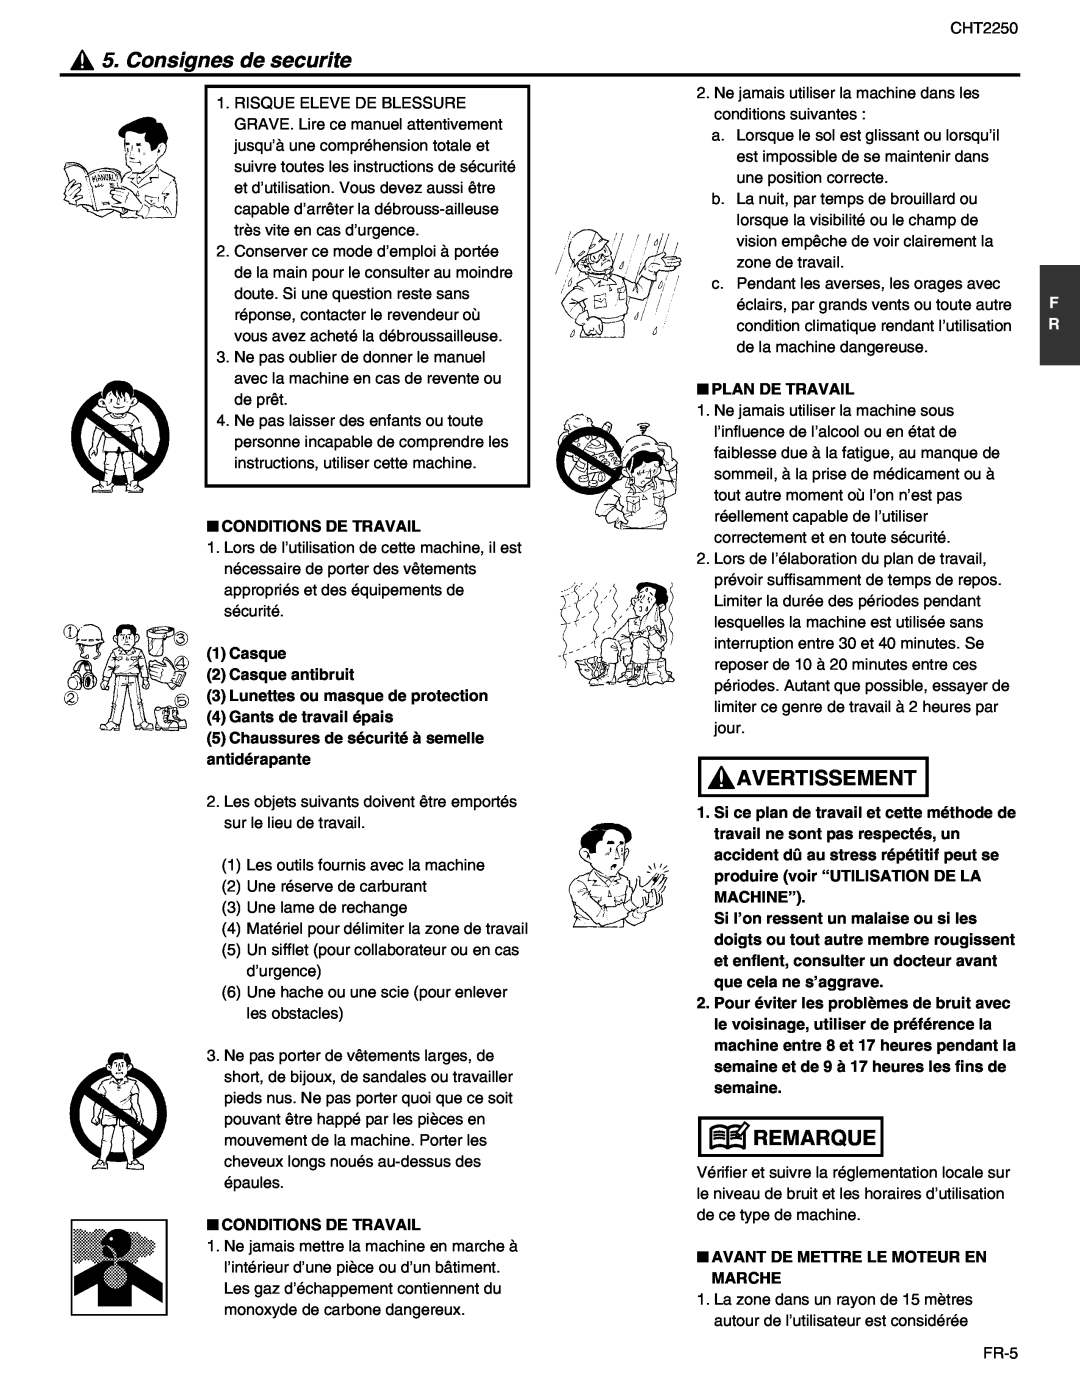 RedMax CHT2250 manual Consignes de securite, Avertissement, Remarque 